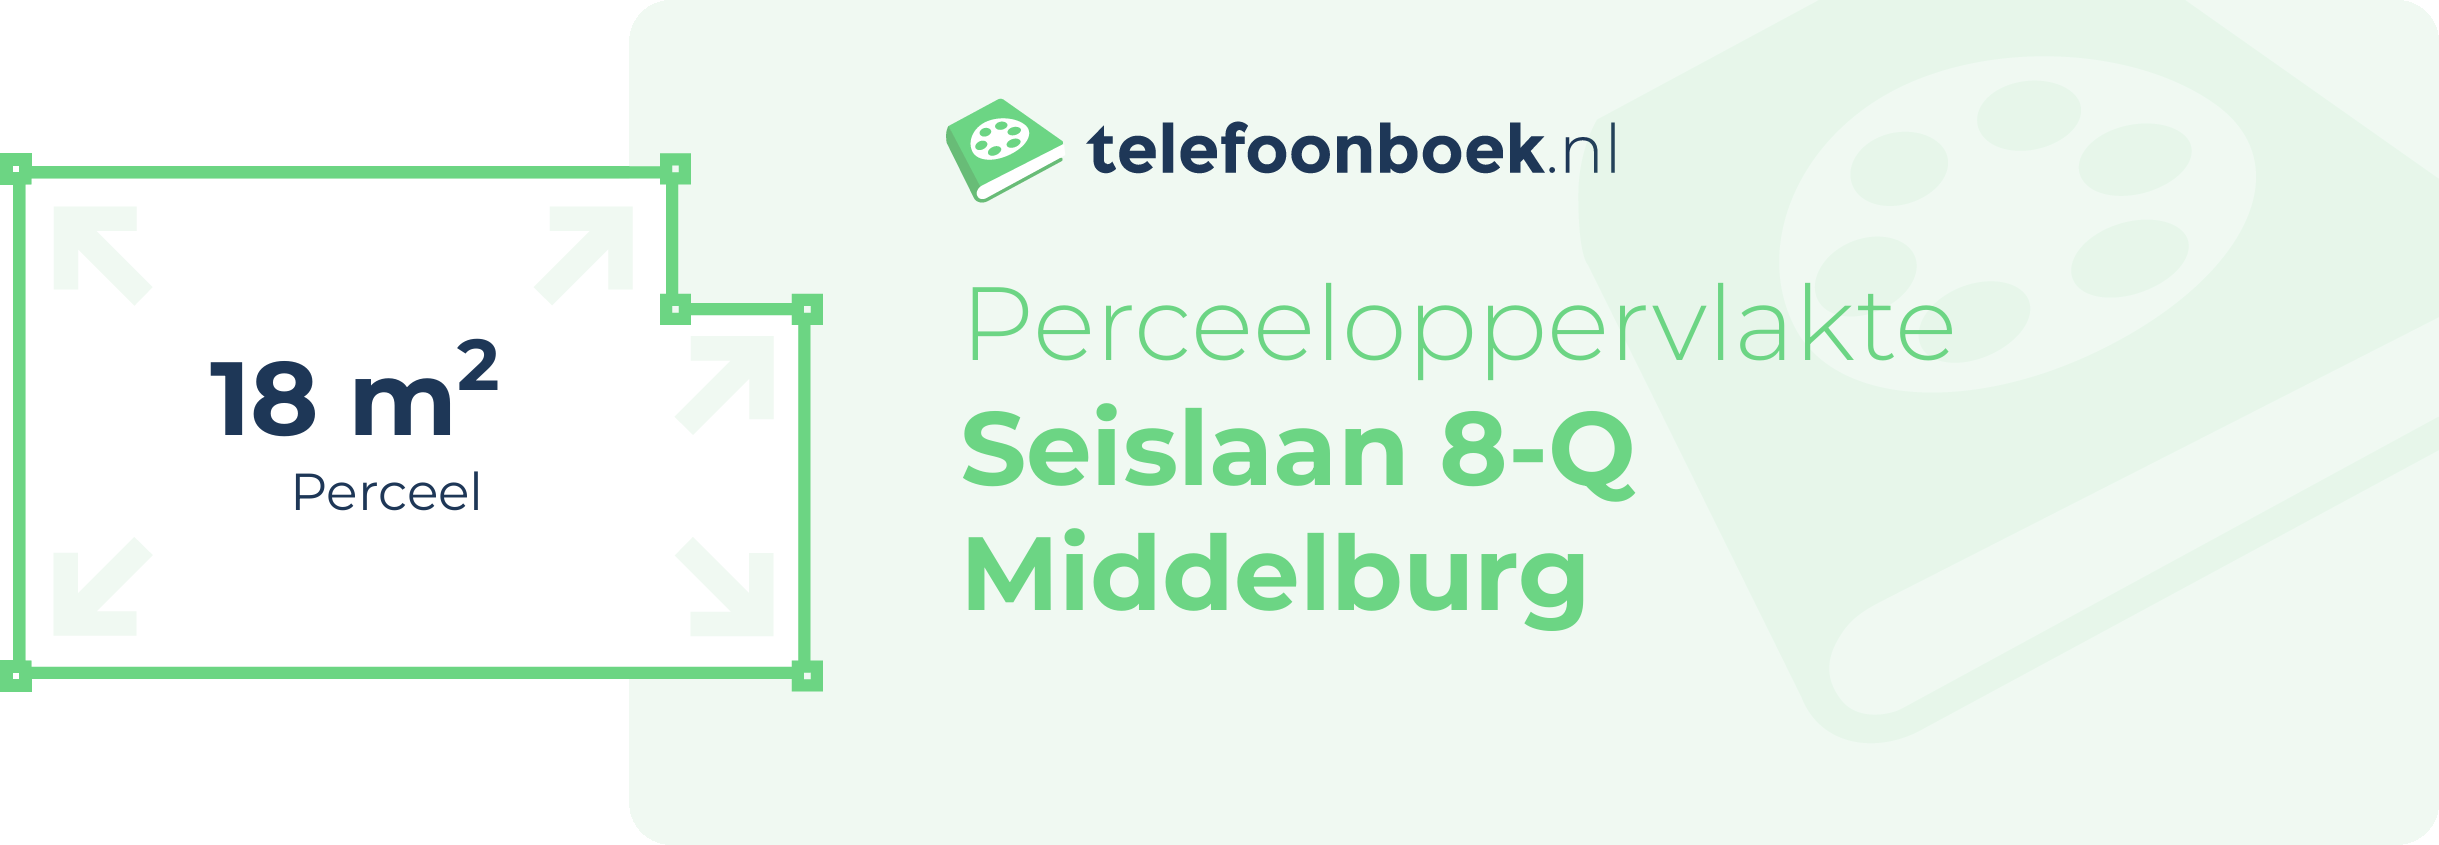 Perceeloppervlakte Seislaan 8-Q Middelburg